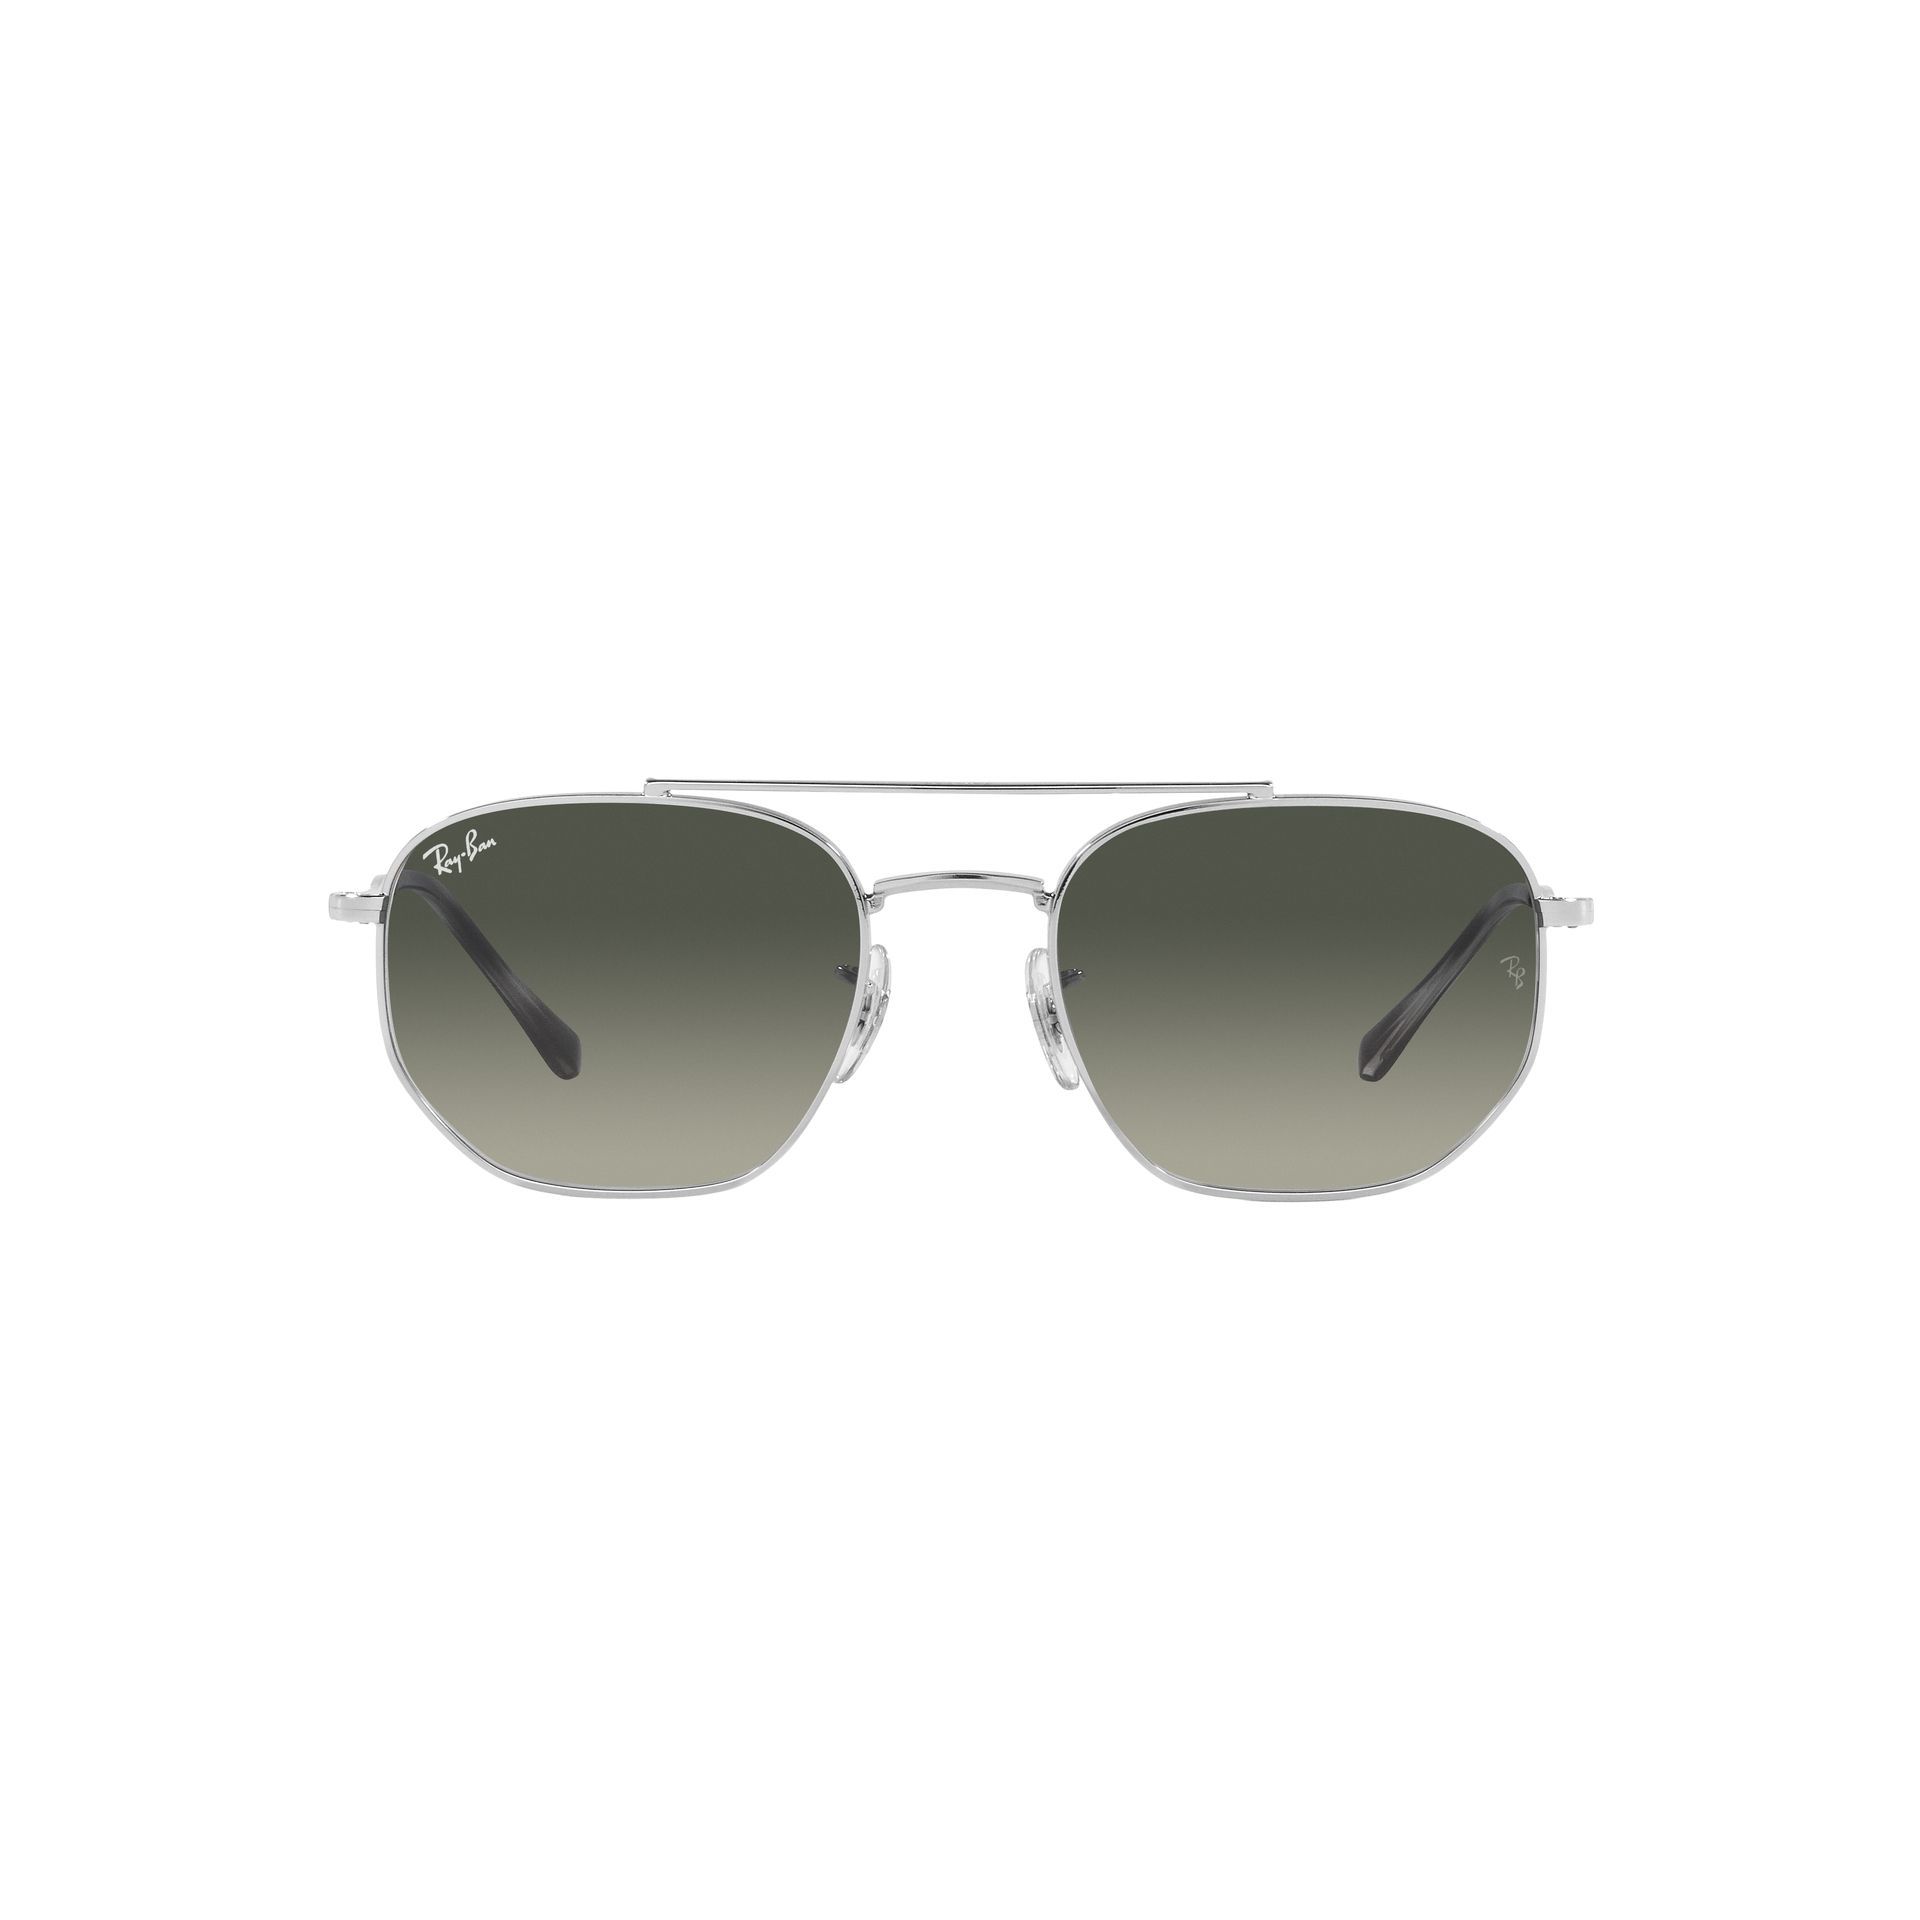 0RB3707 Irregular Sunglasses 003 71 - size 54